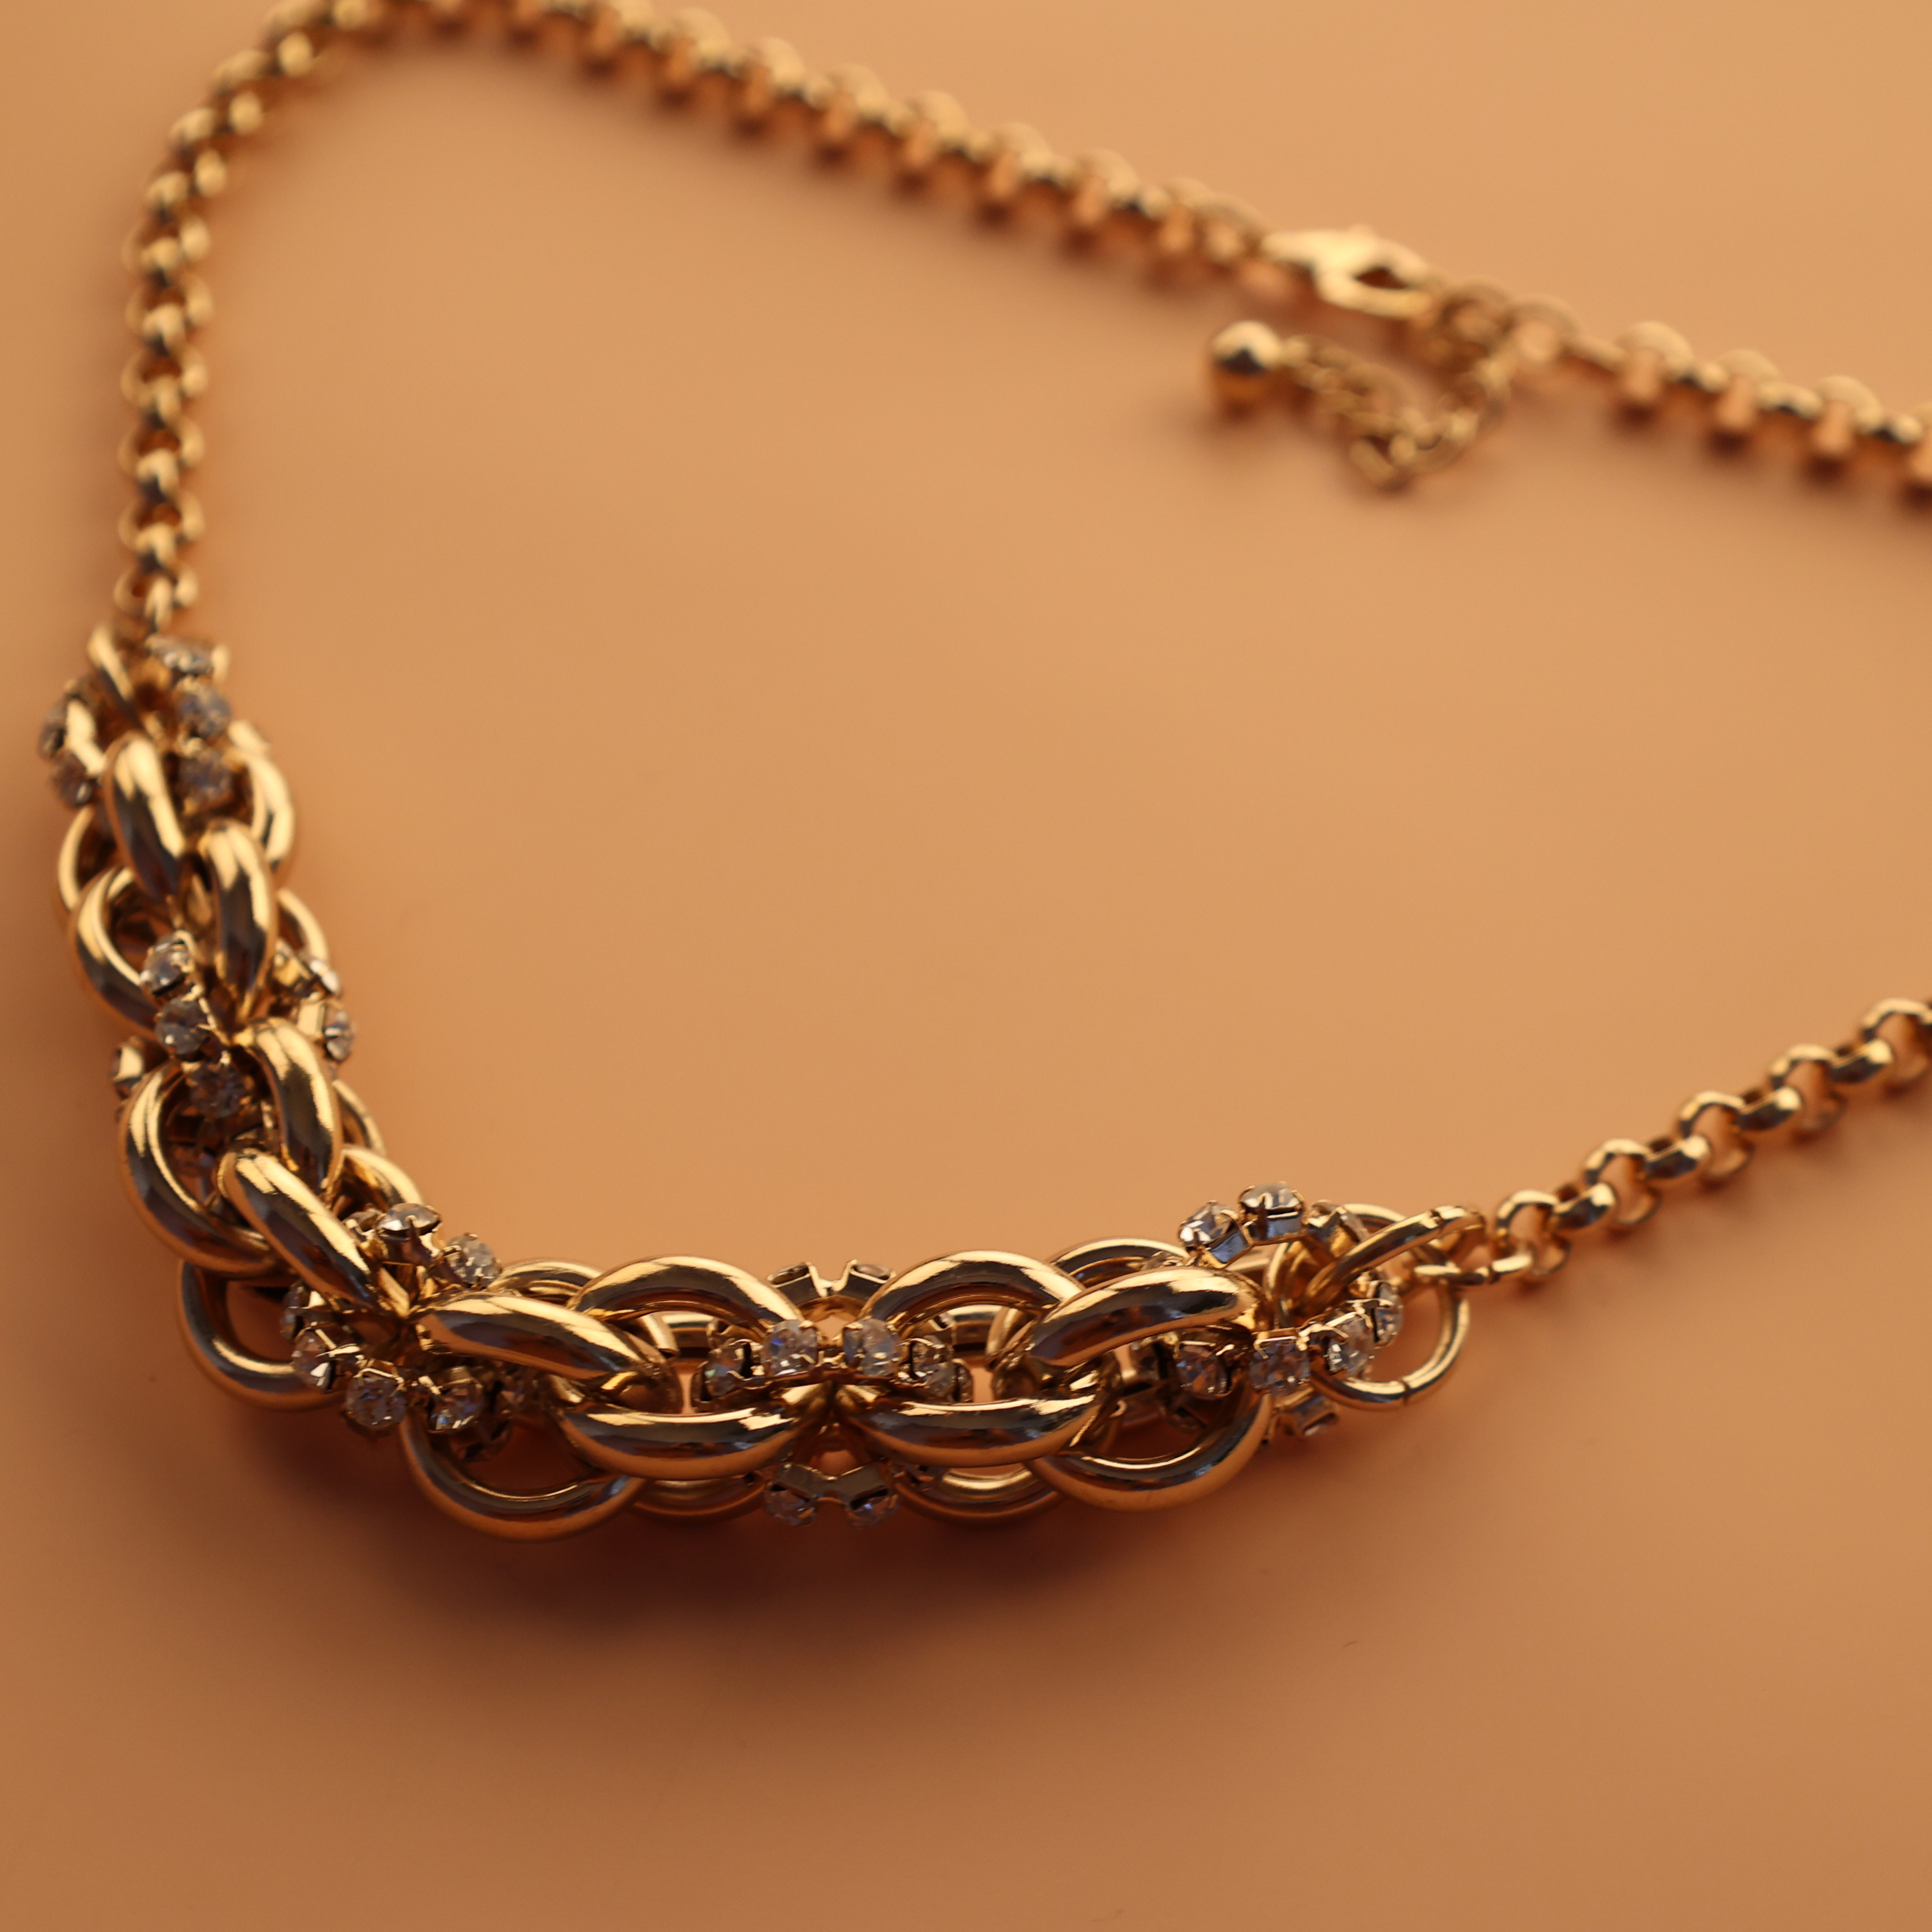 Gold Chains Design Necklace Fashion Necklace Gold Color